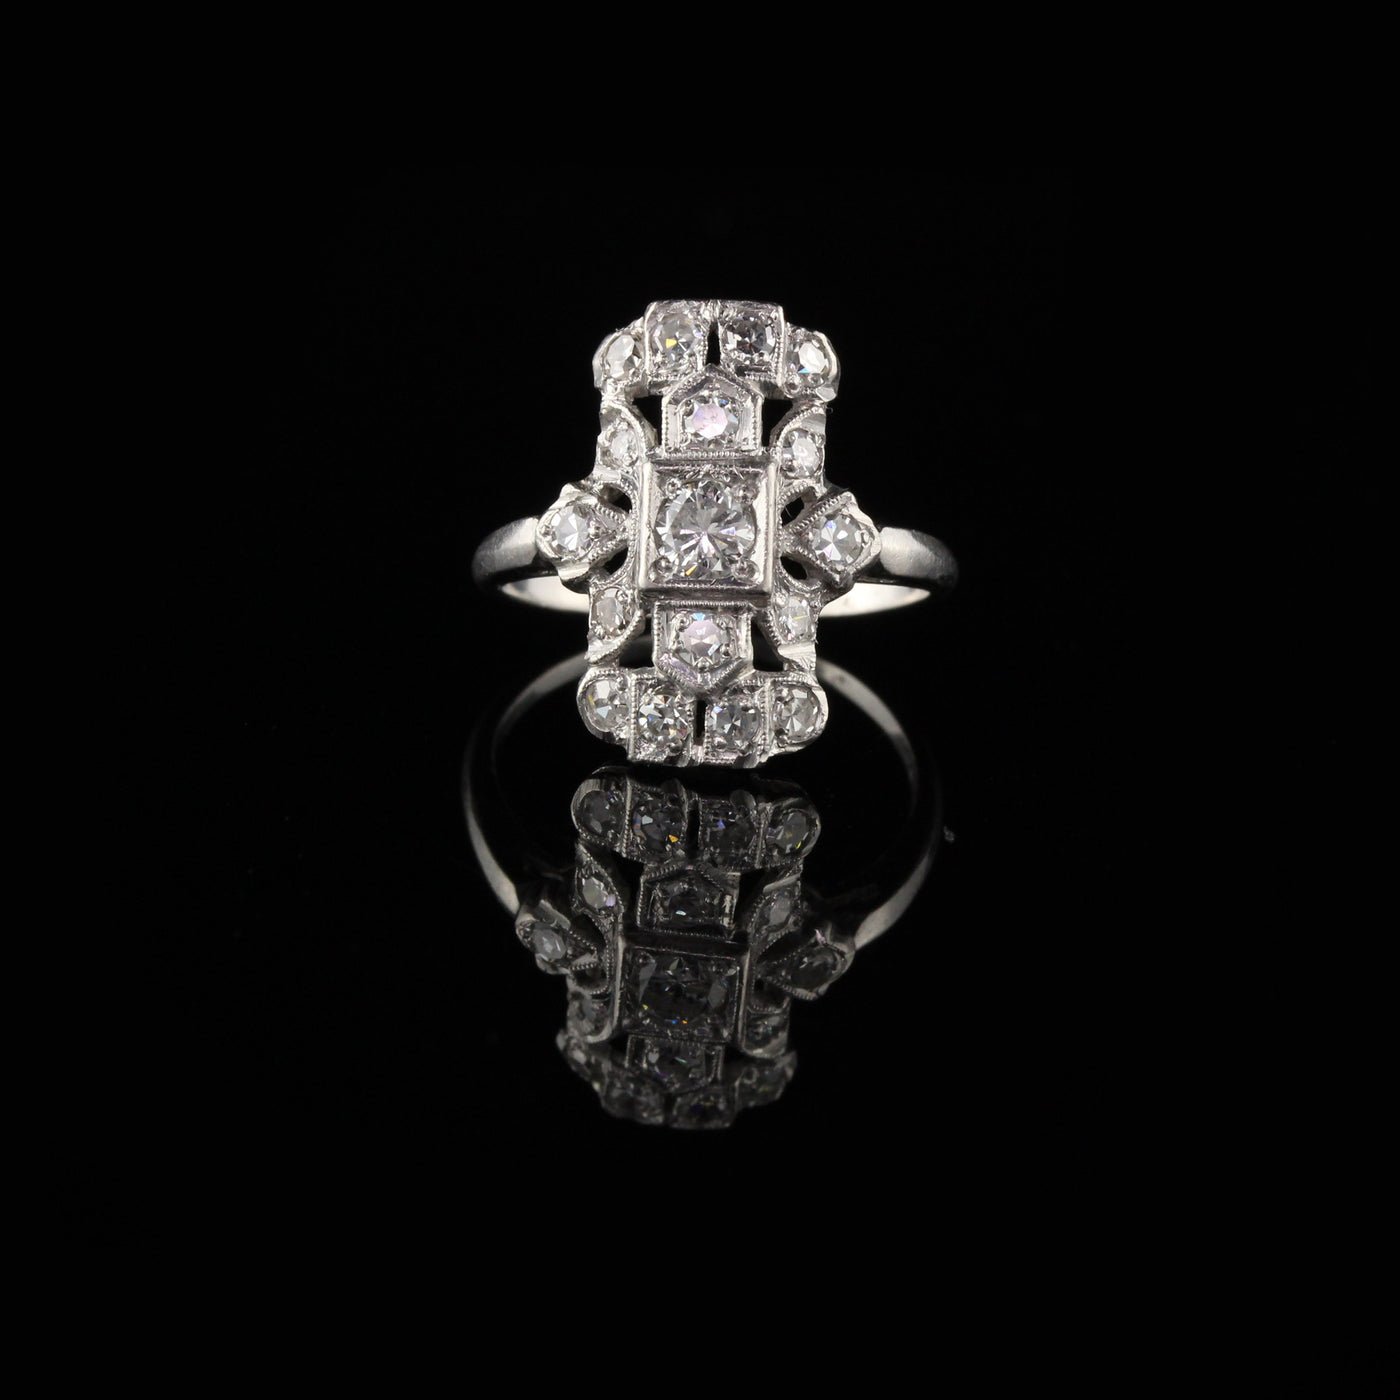 Antique Art Deco Platinum Diamond Shield Ring - Size 4